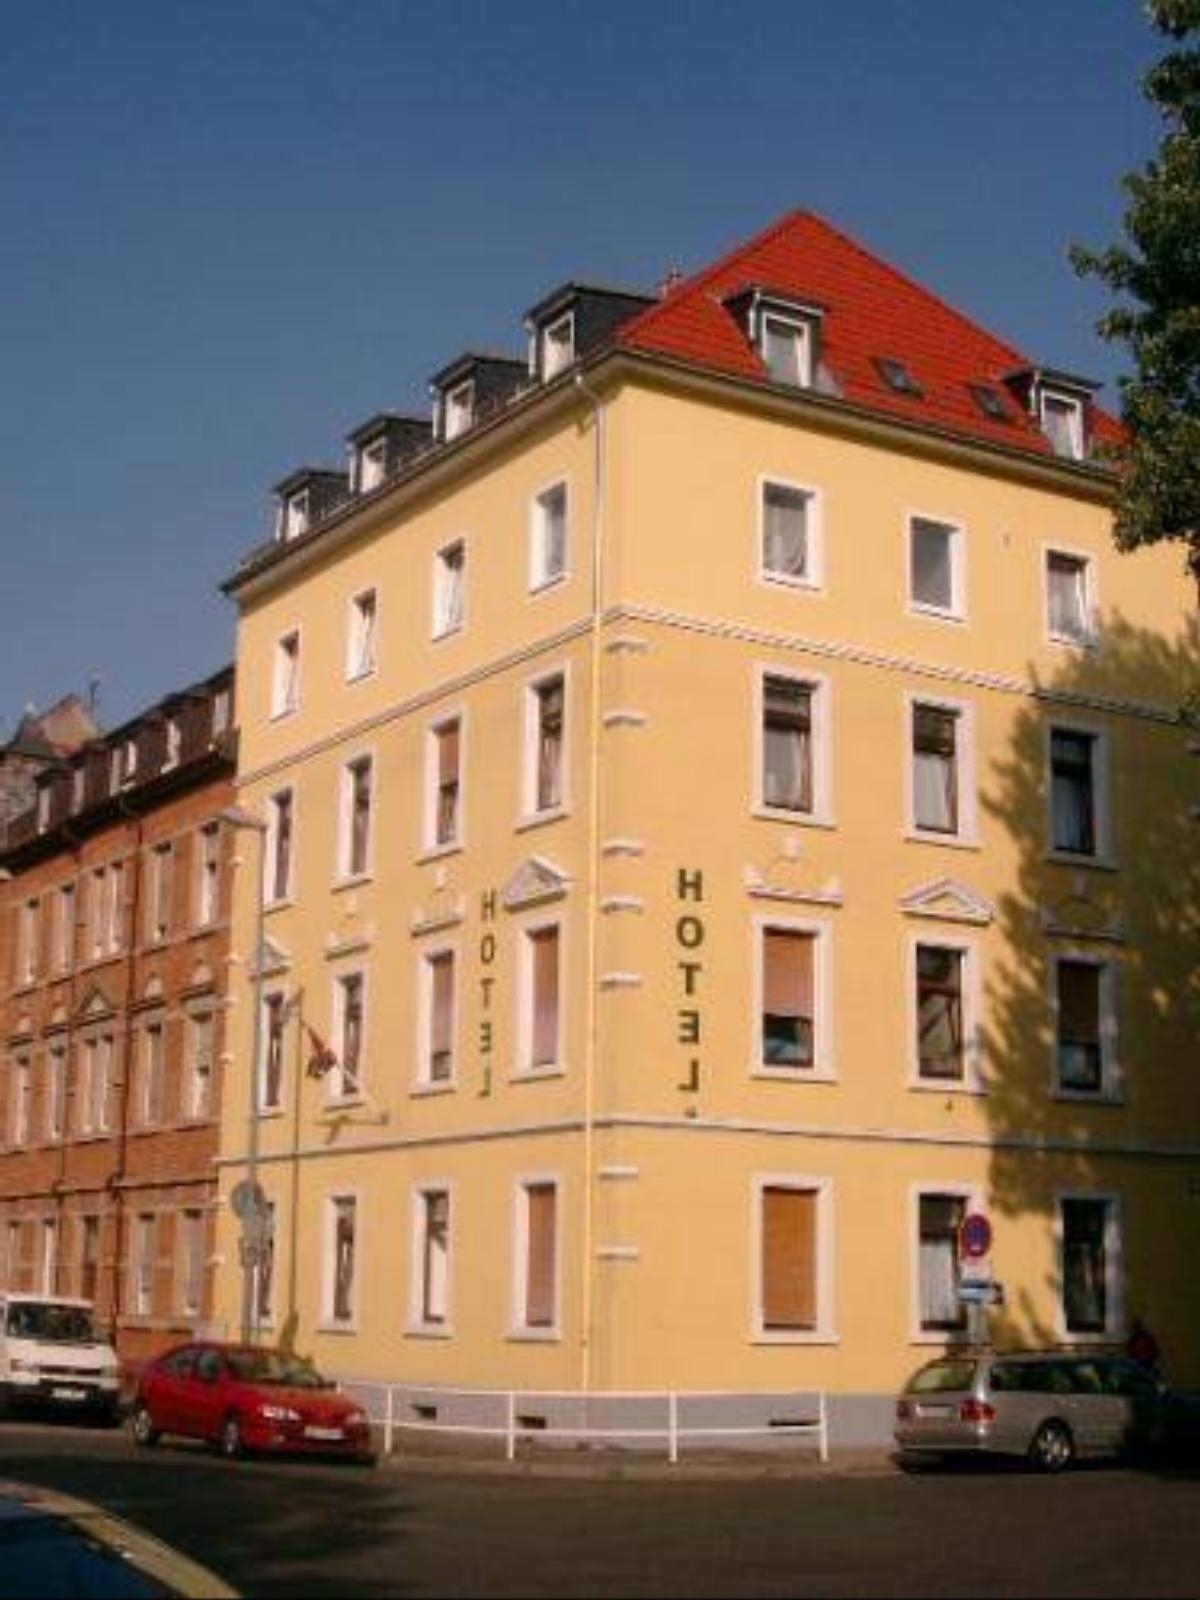 Classic Inn Hotel Heidelberg Germany